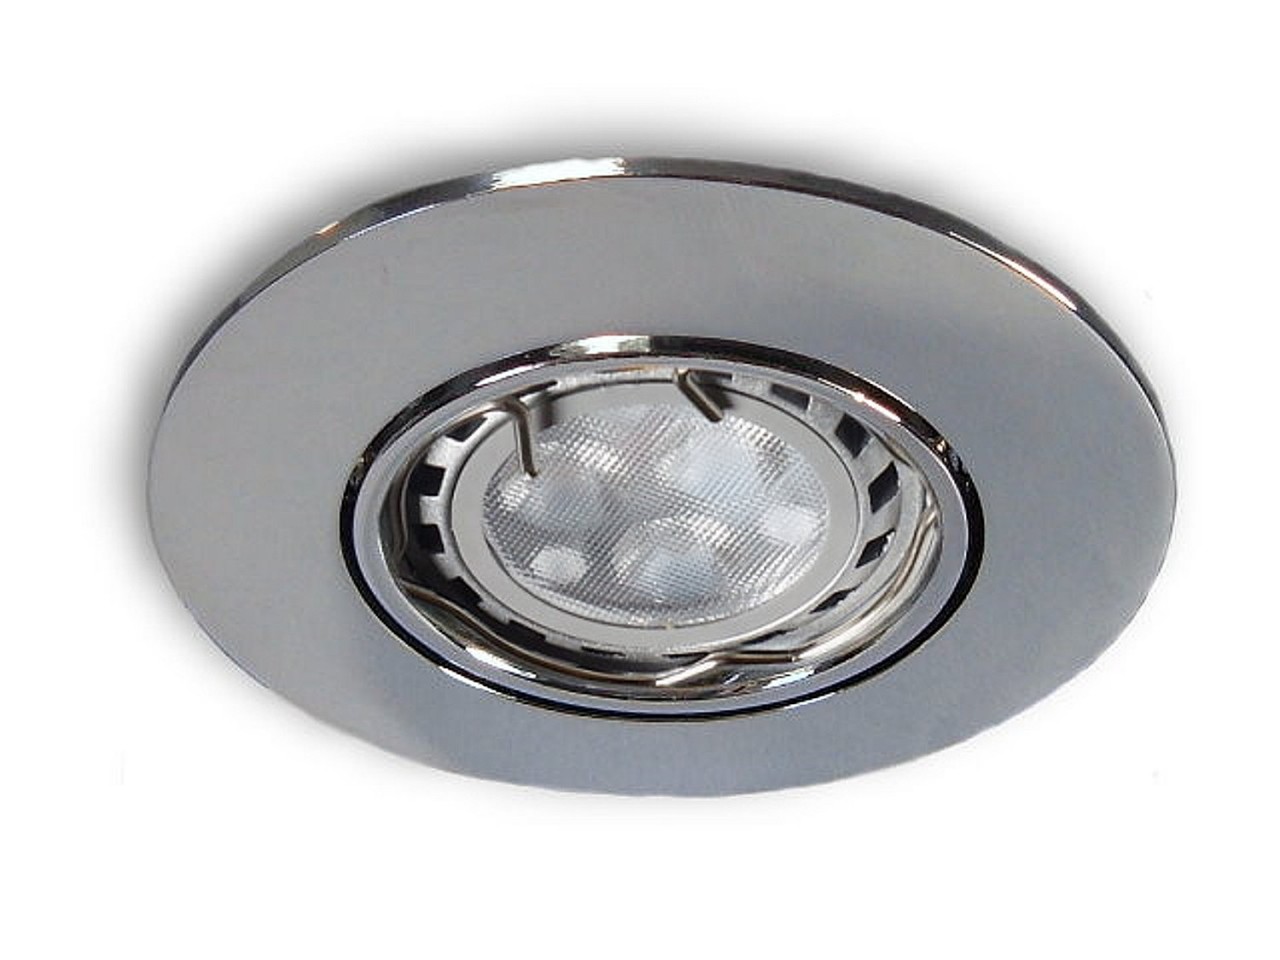 12 V LED Einbaustrahler Spot MR11 rund chrom glanz - 3,3 W warmweiss von C-Light GmbH